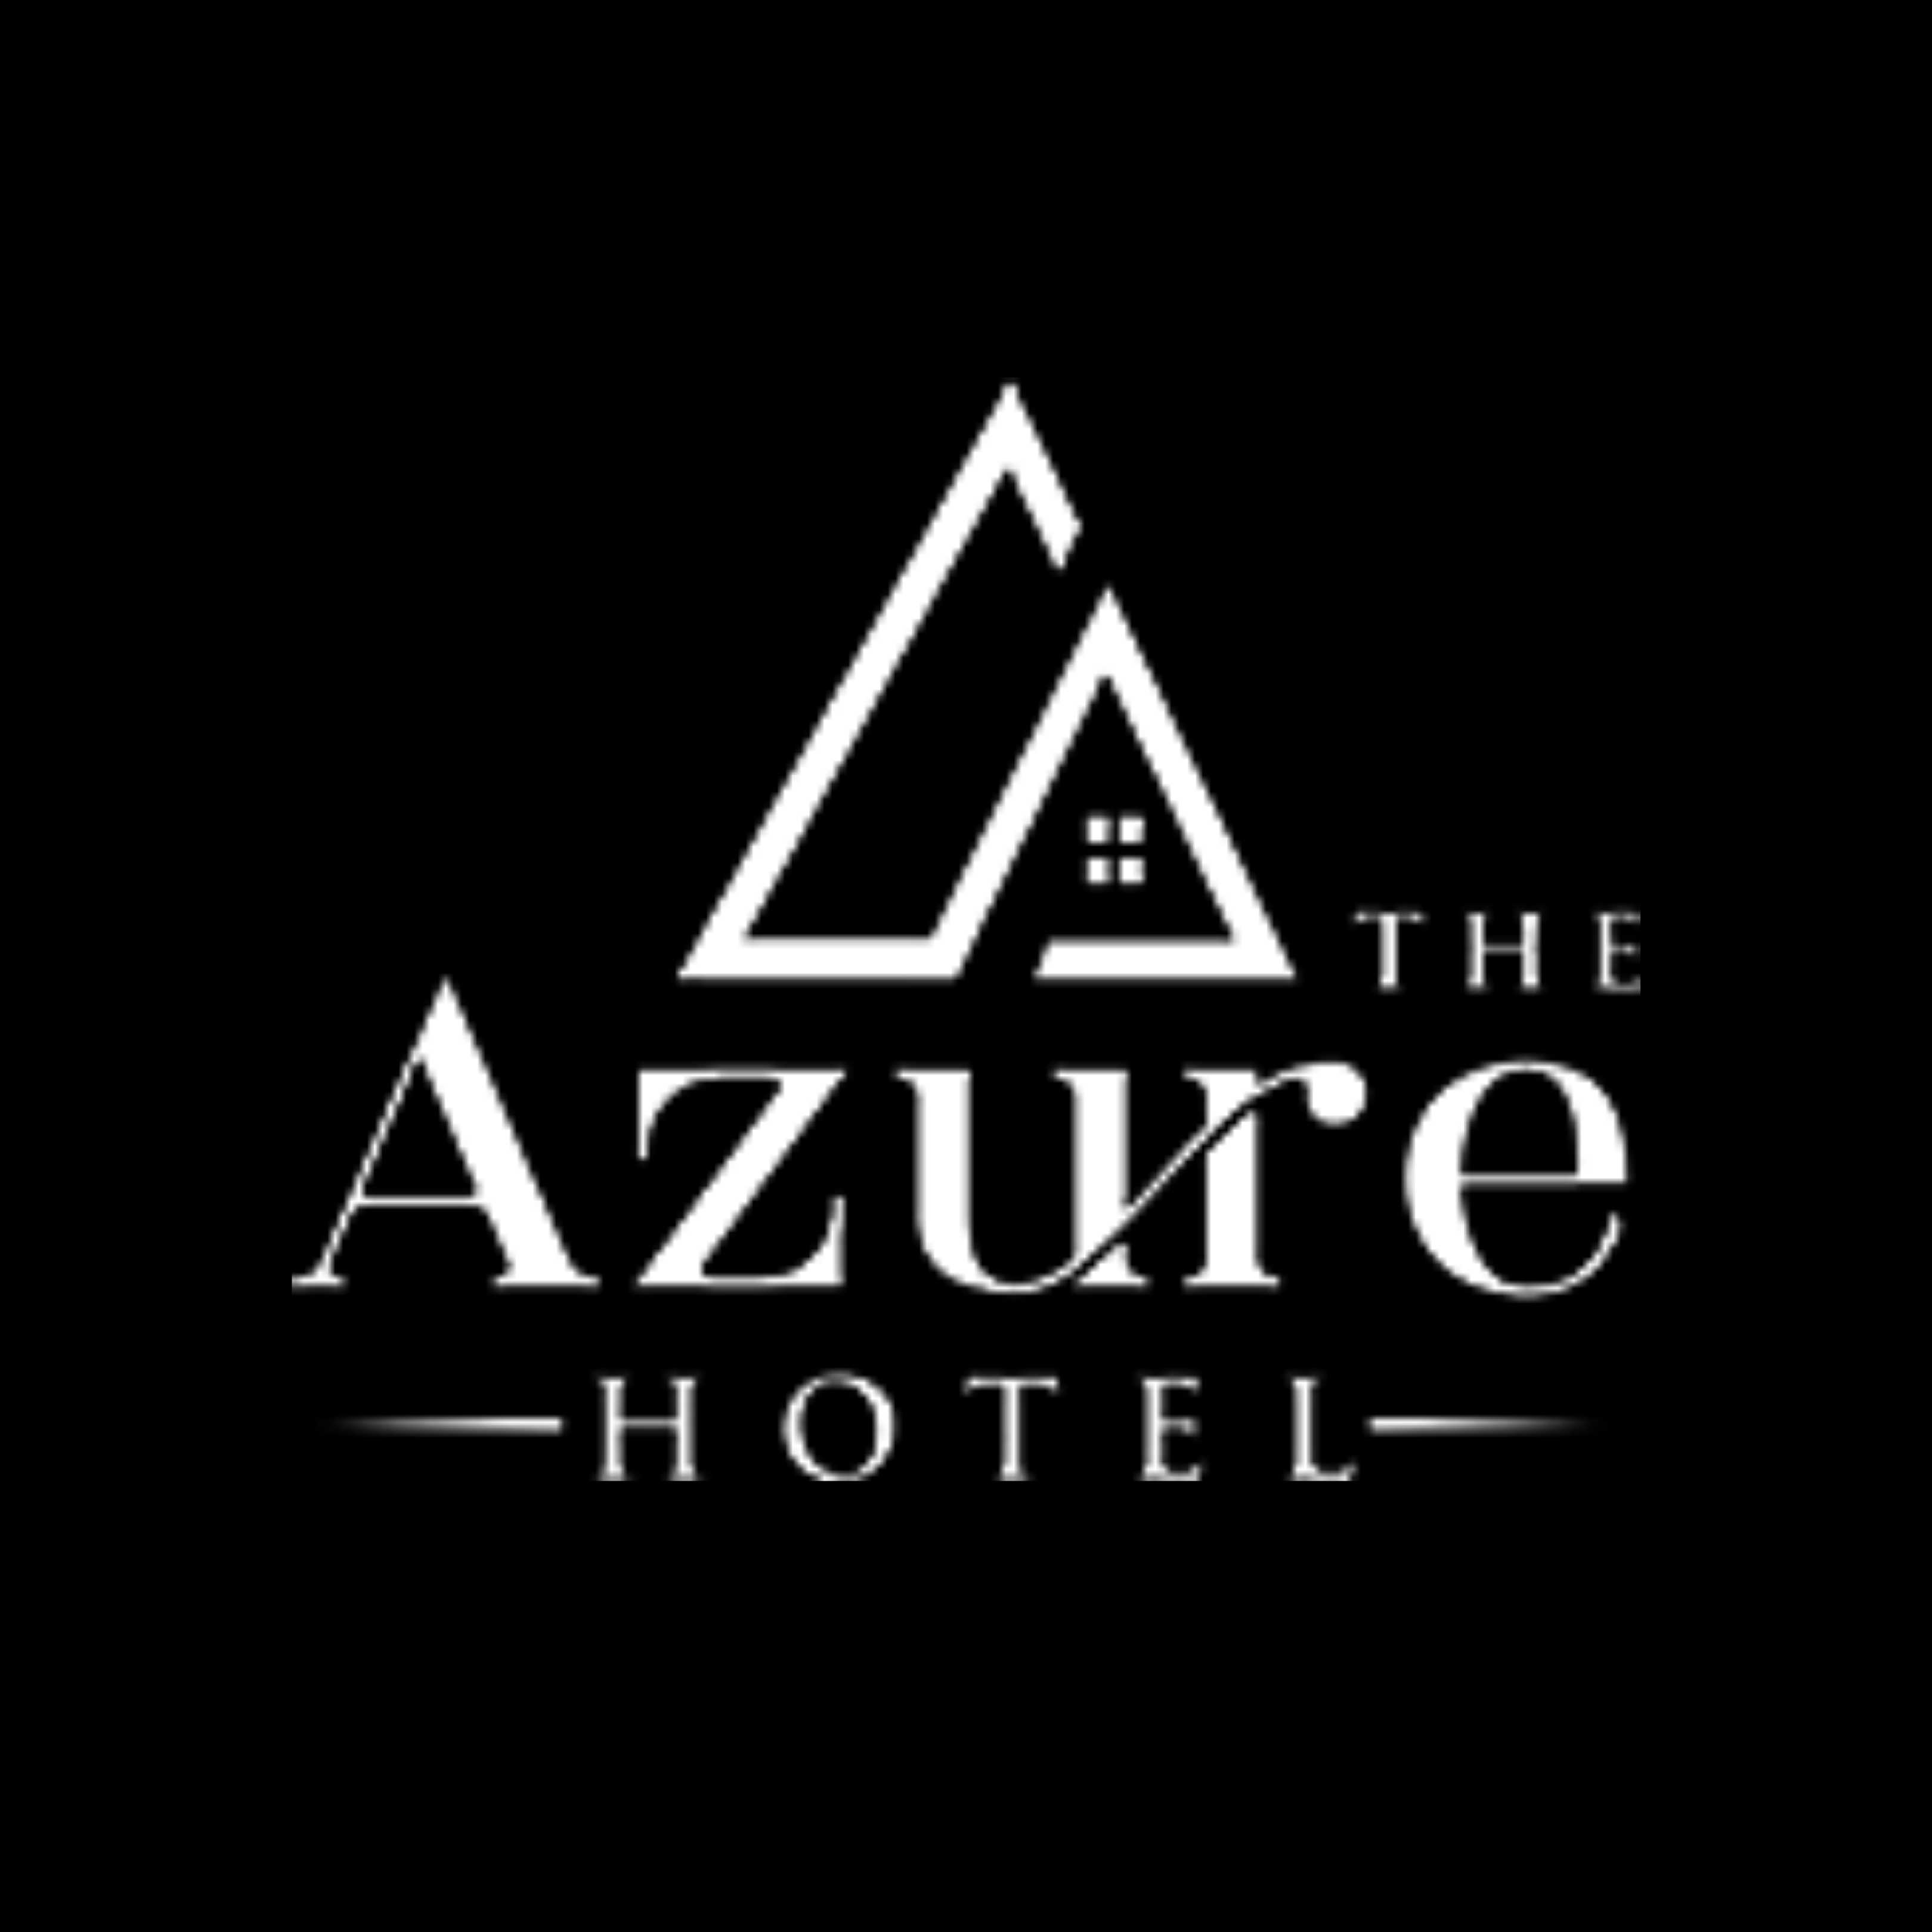 Theazure Hotel